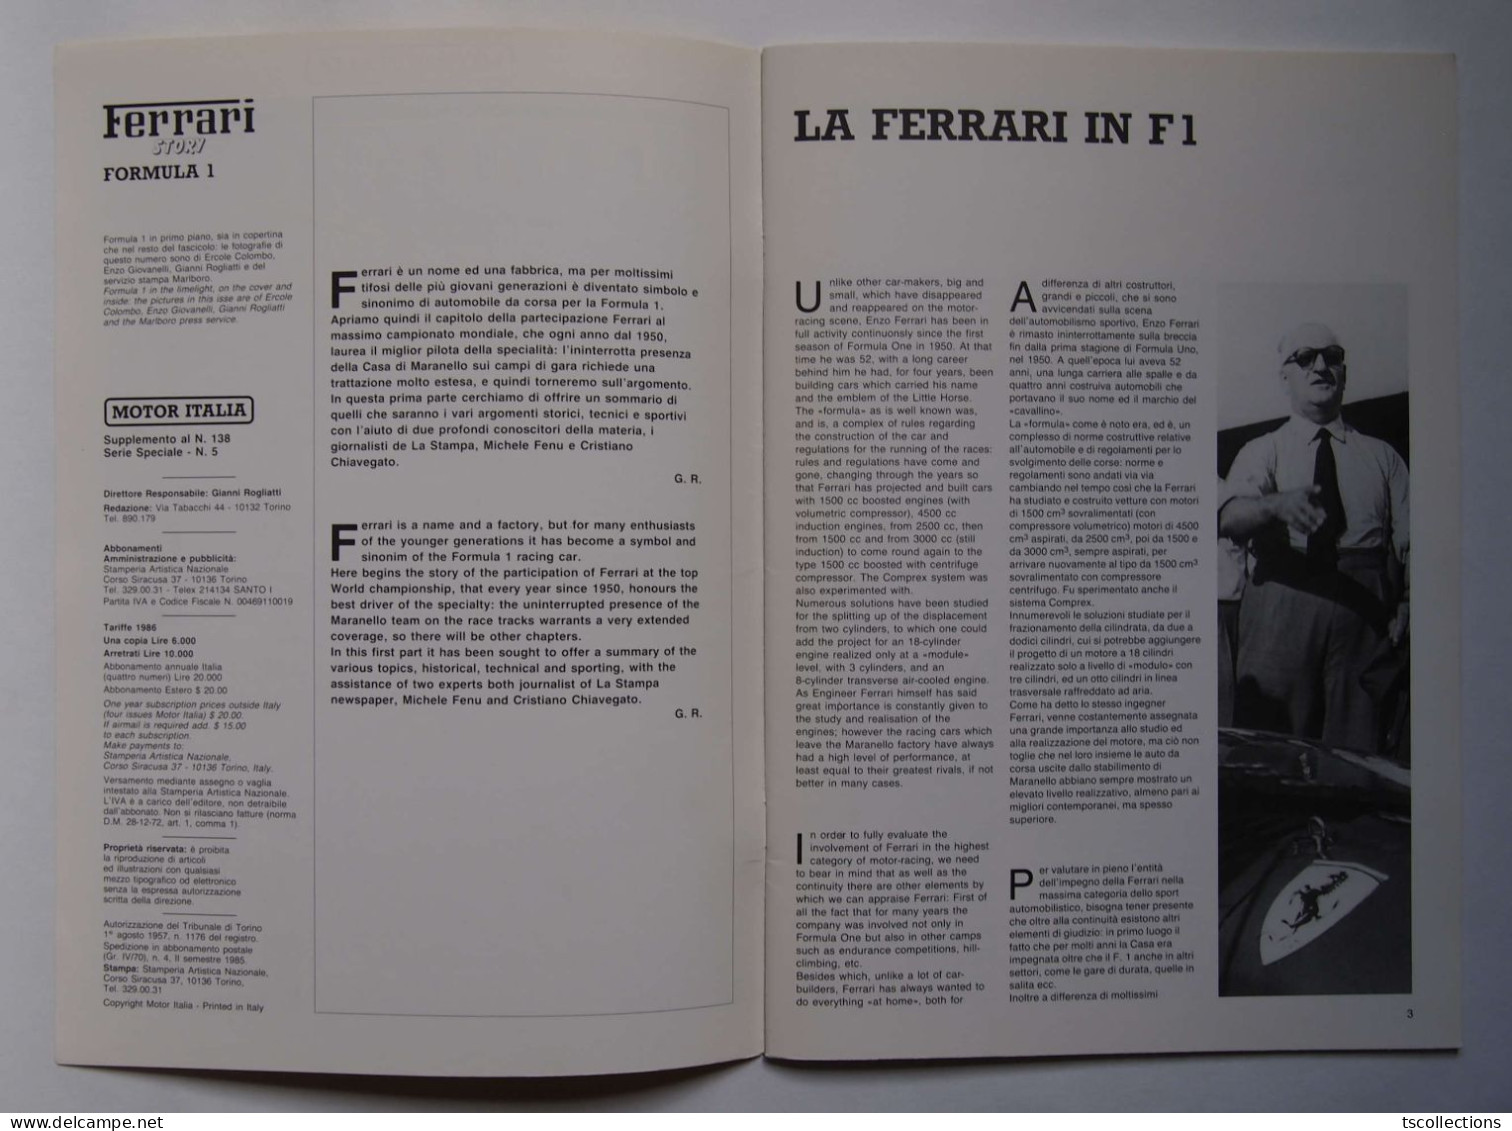 Ferrari Story - Formula 1 - Automobile - F1